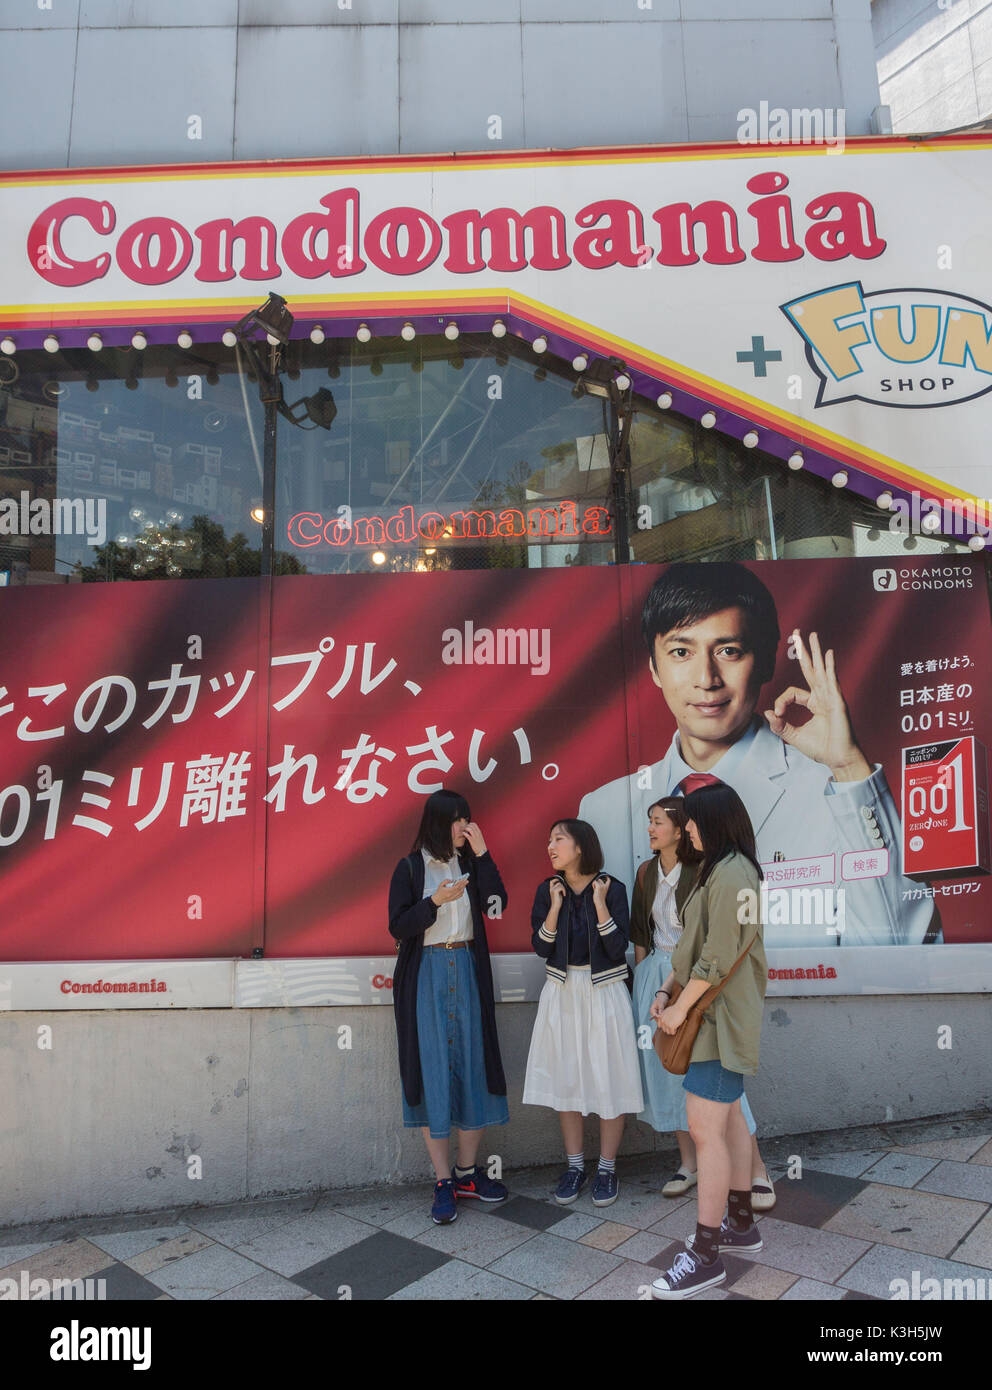 Japan, Tokyo City, Shibuya District, Omotesando area, Condoms Shop Stock Photo